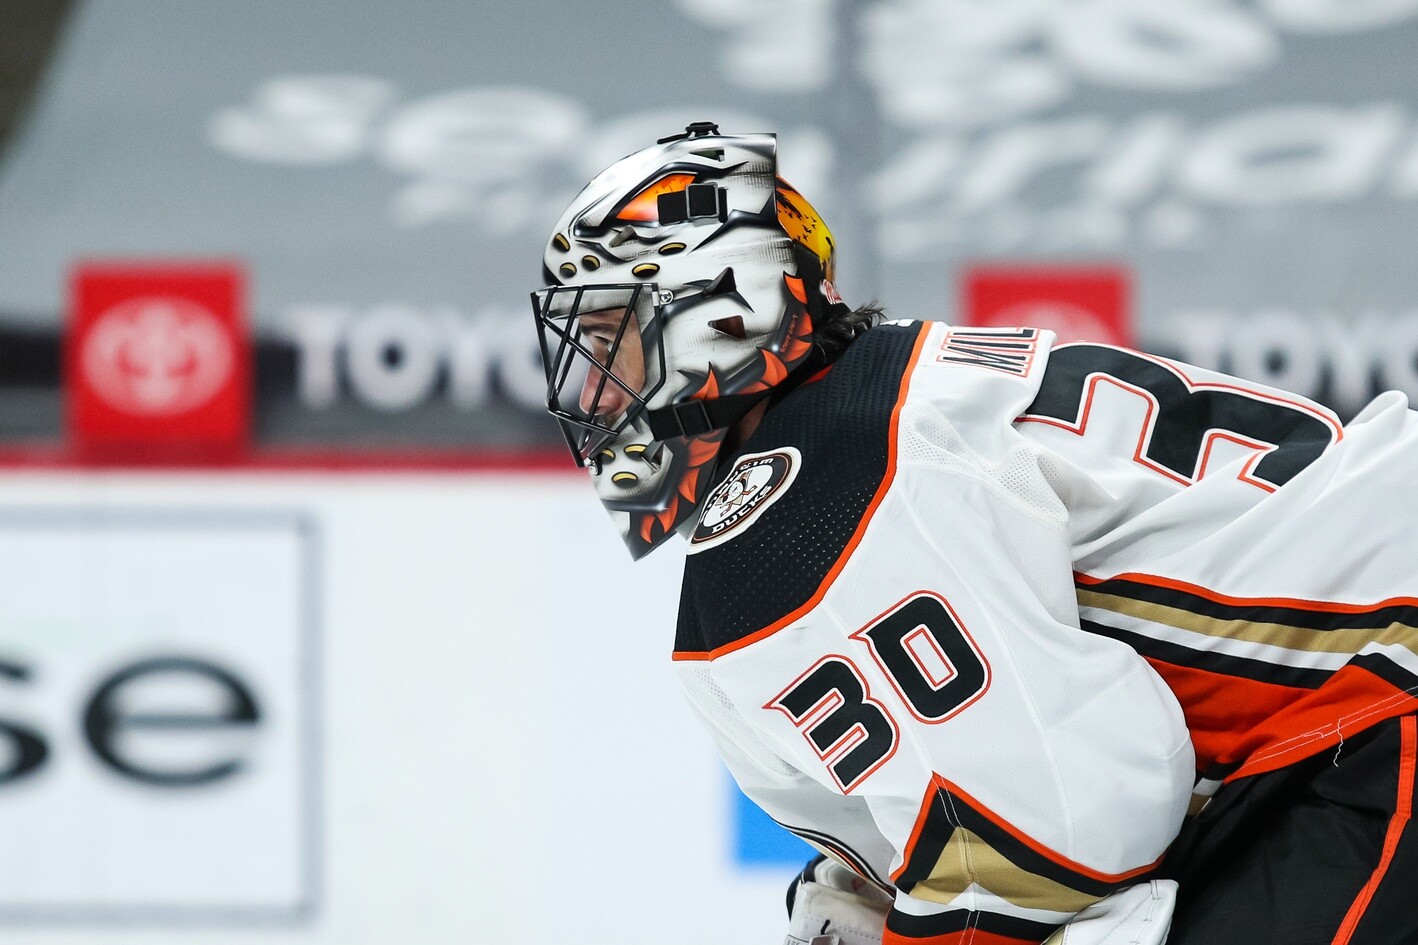 Anaheim Ducks goalie Ryan Miller to retire at end of season